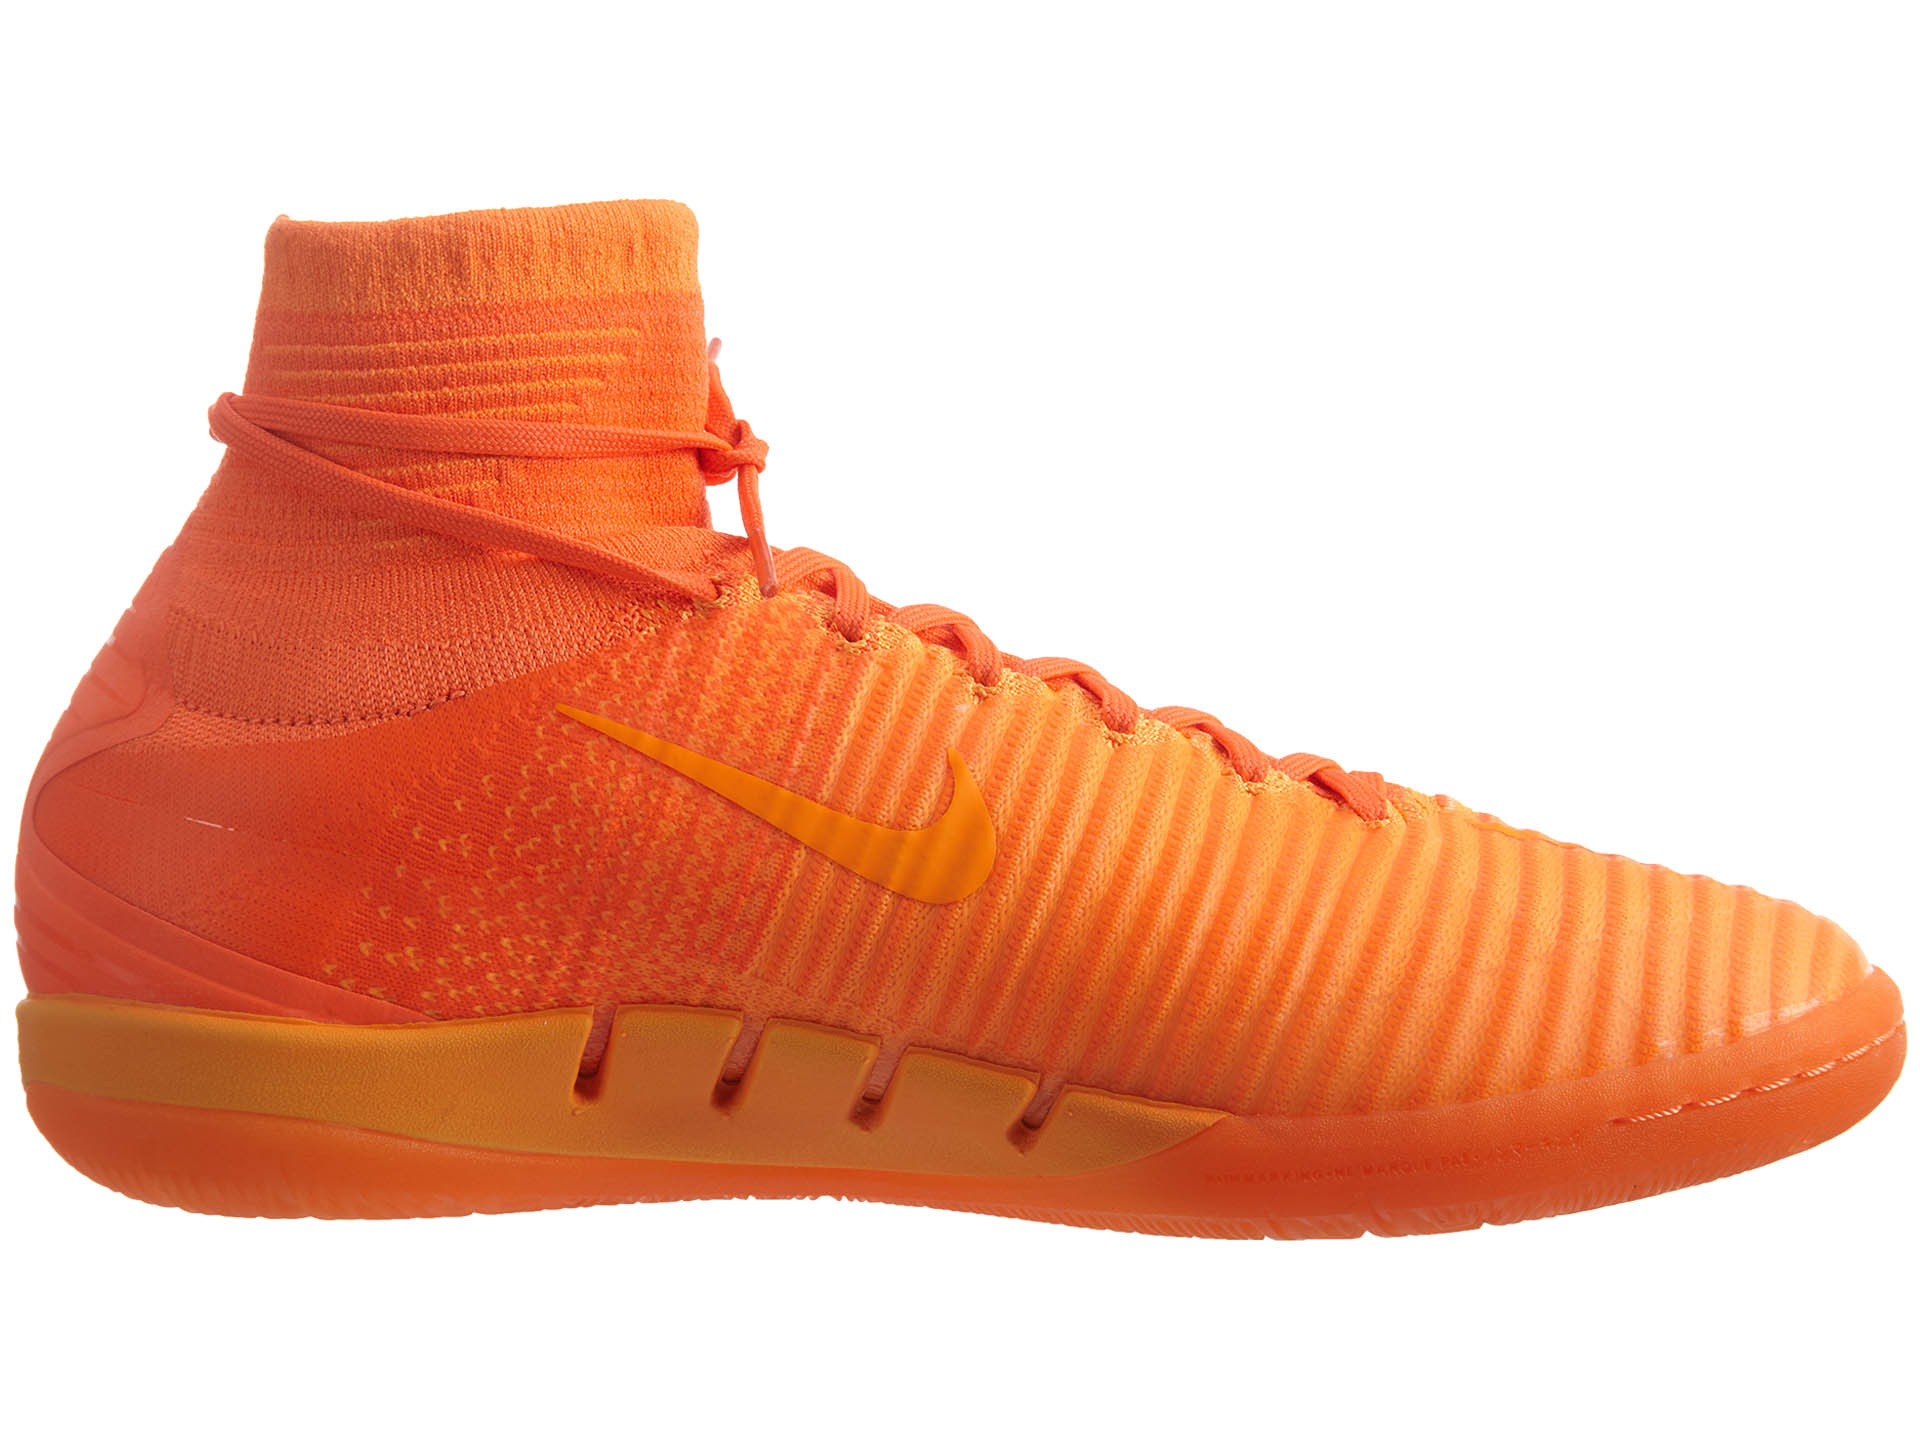 Nike Mercurialx Proximo Ii Ic Total Orange/Bright Ctrs-Hyper 